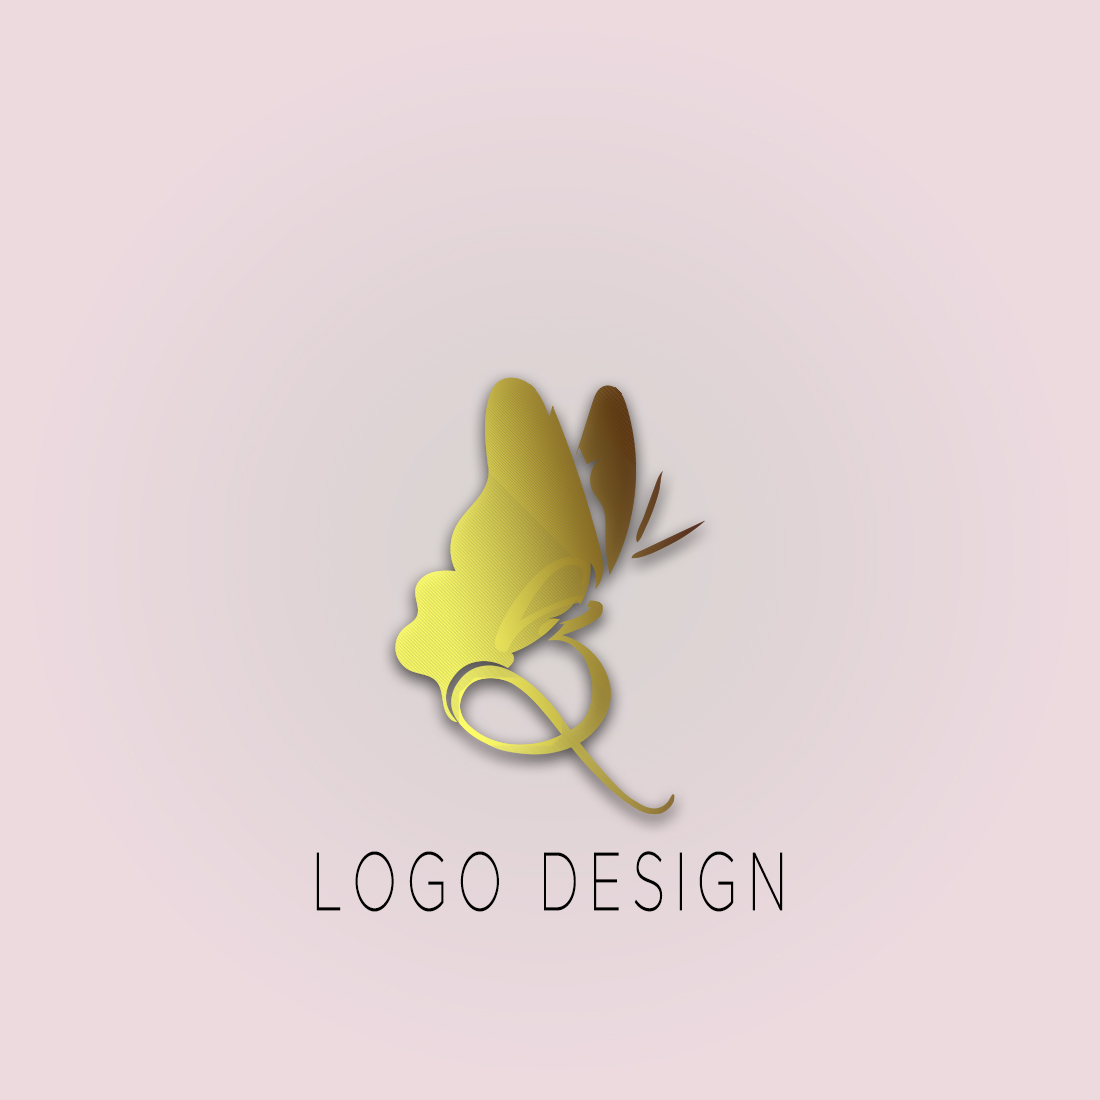 Logo design with a gold leaf.